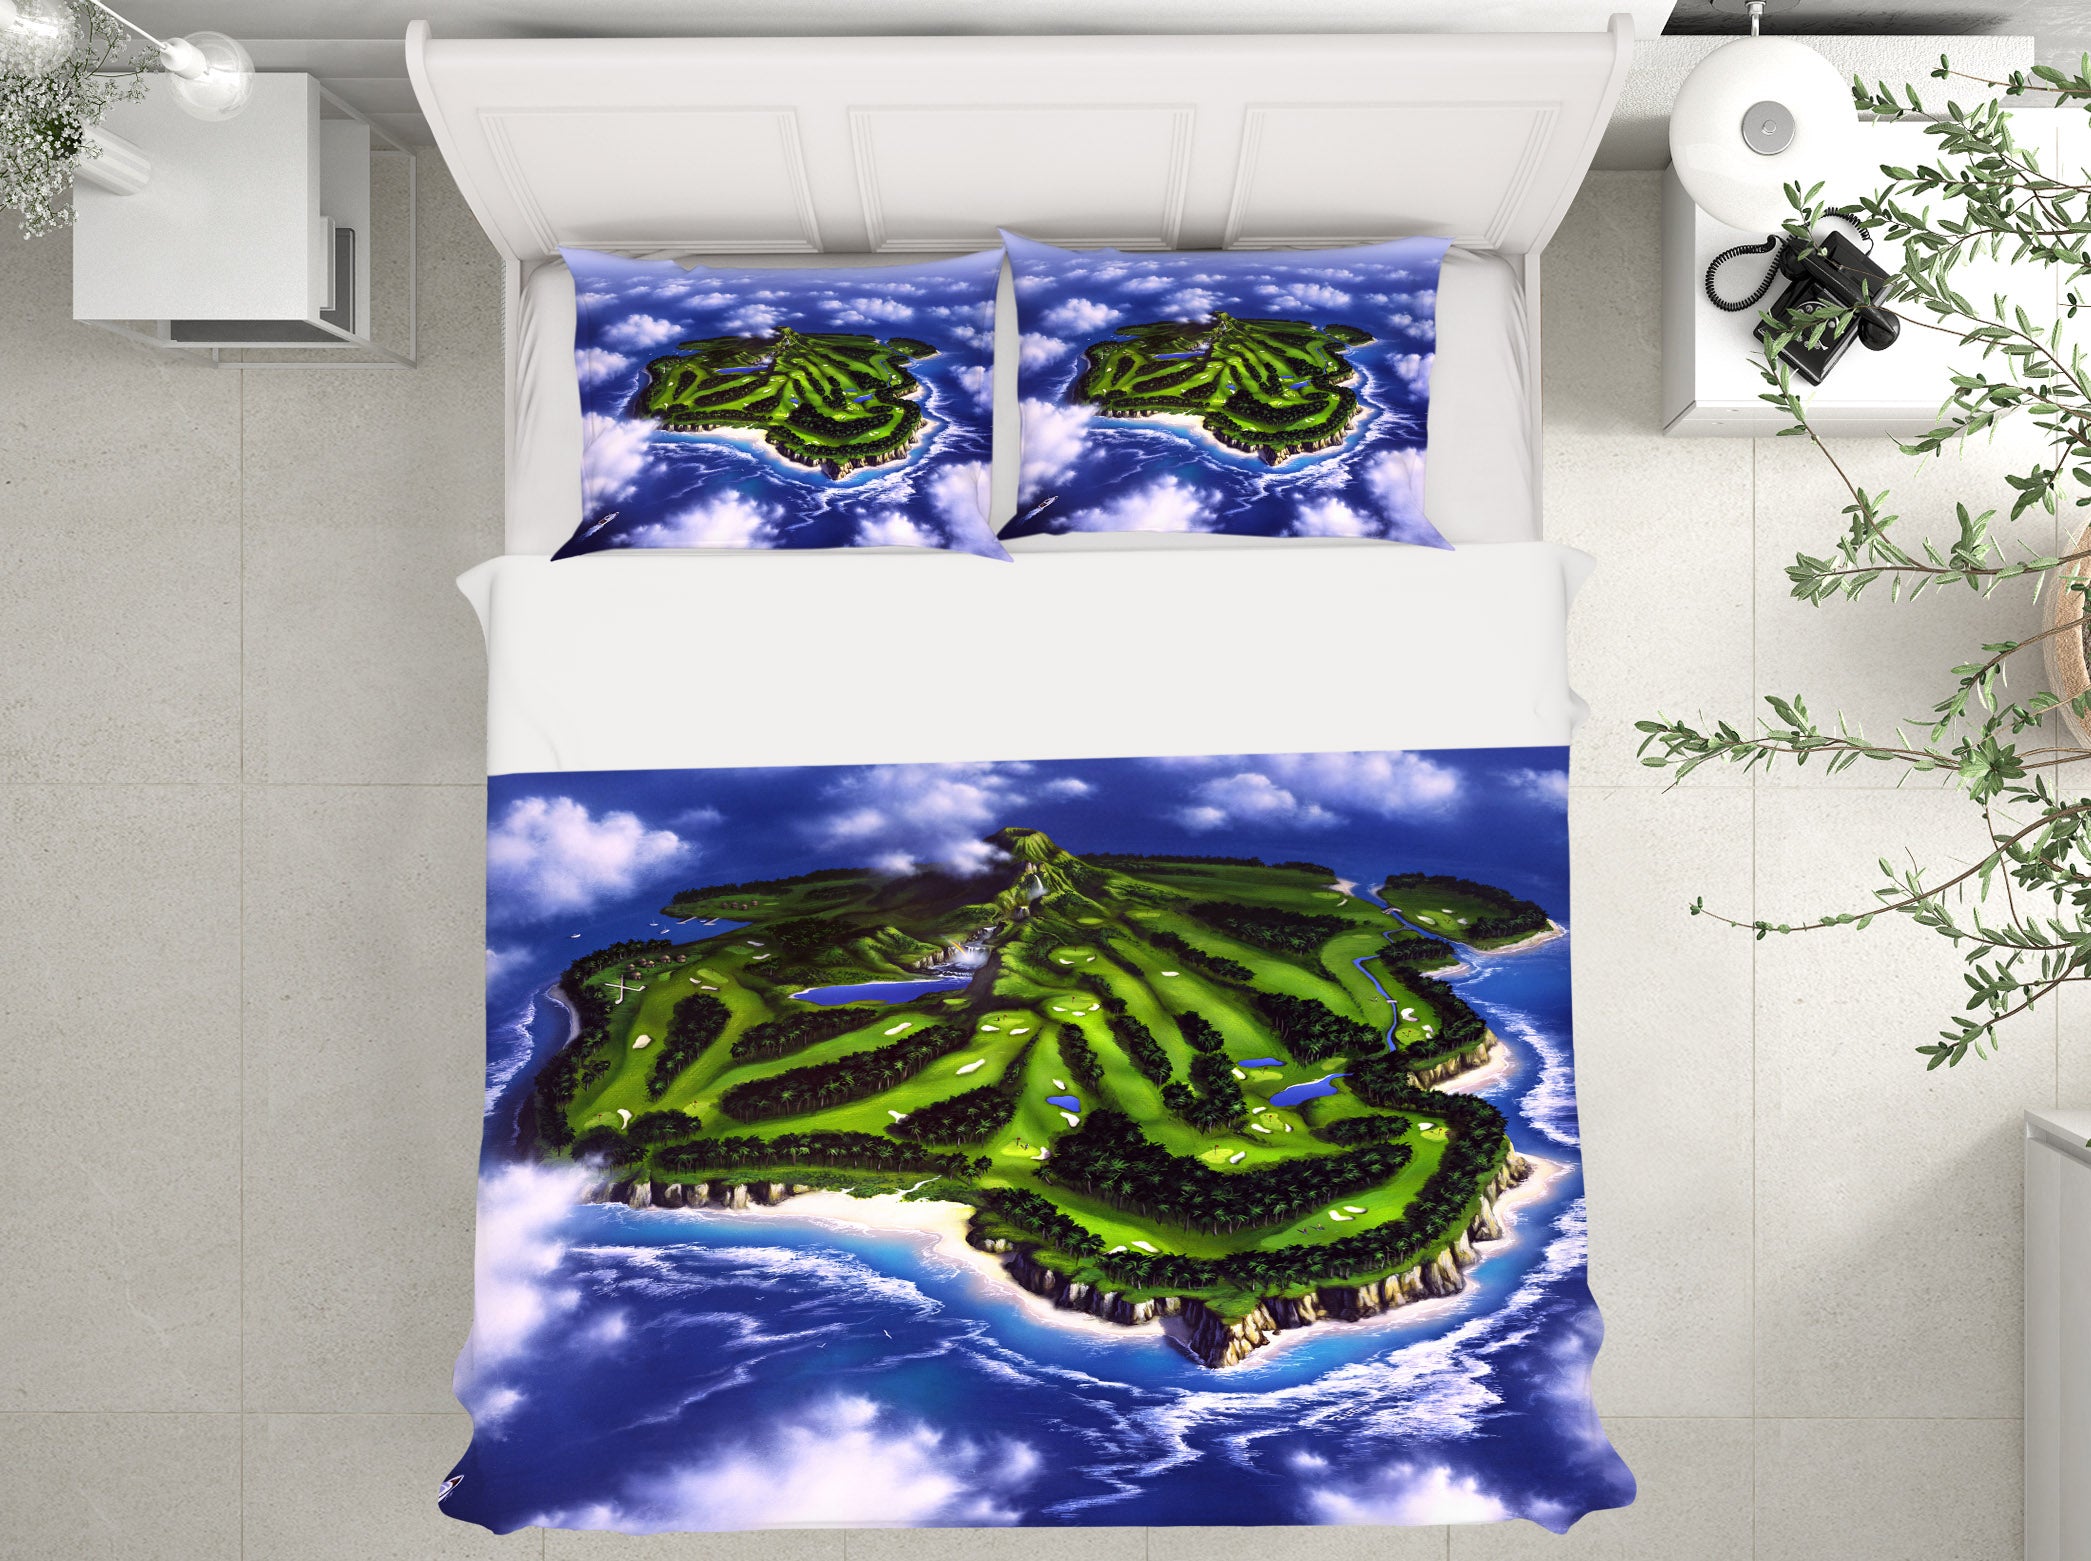 3D Paradise Isle 86007 Jerry LoFaro bedding Bed Pillowcases Quilt